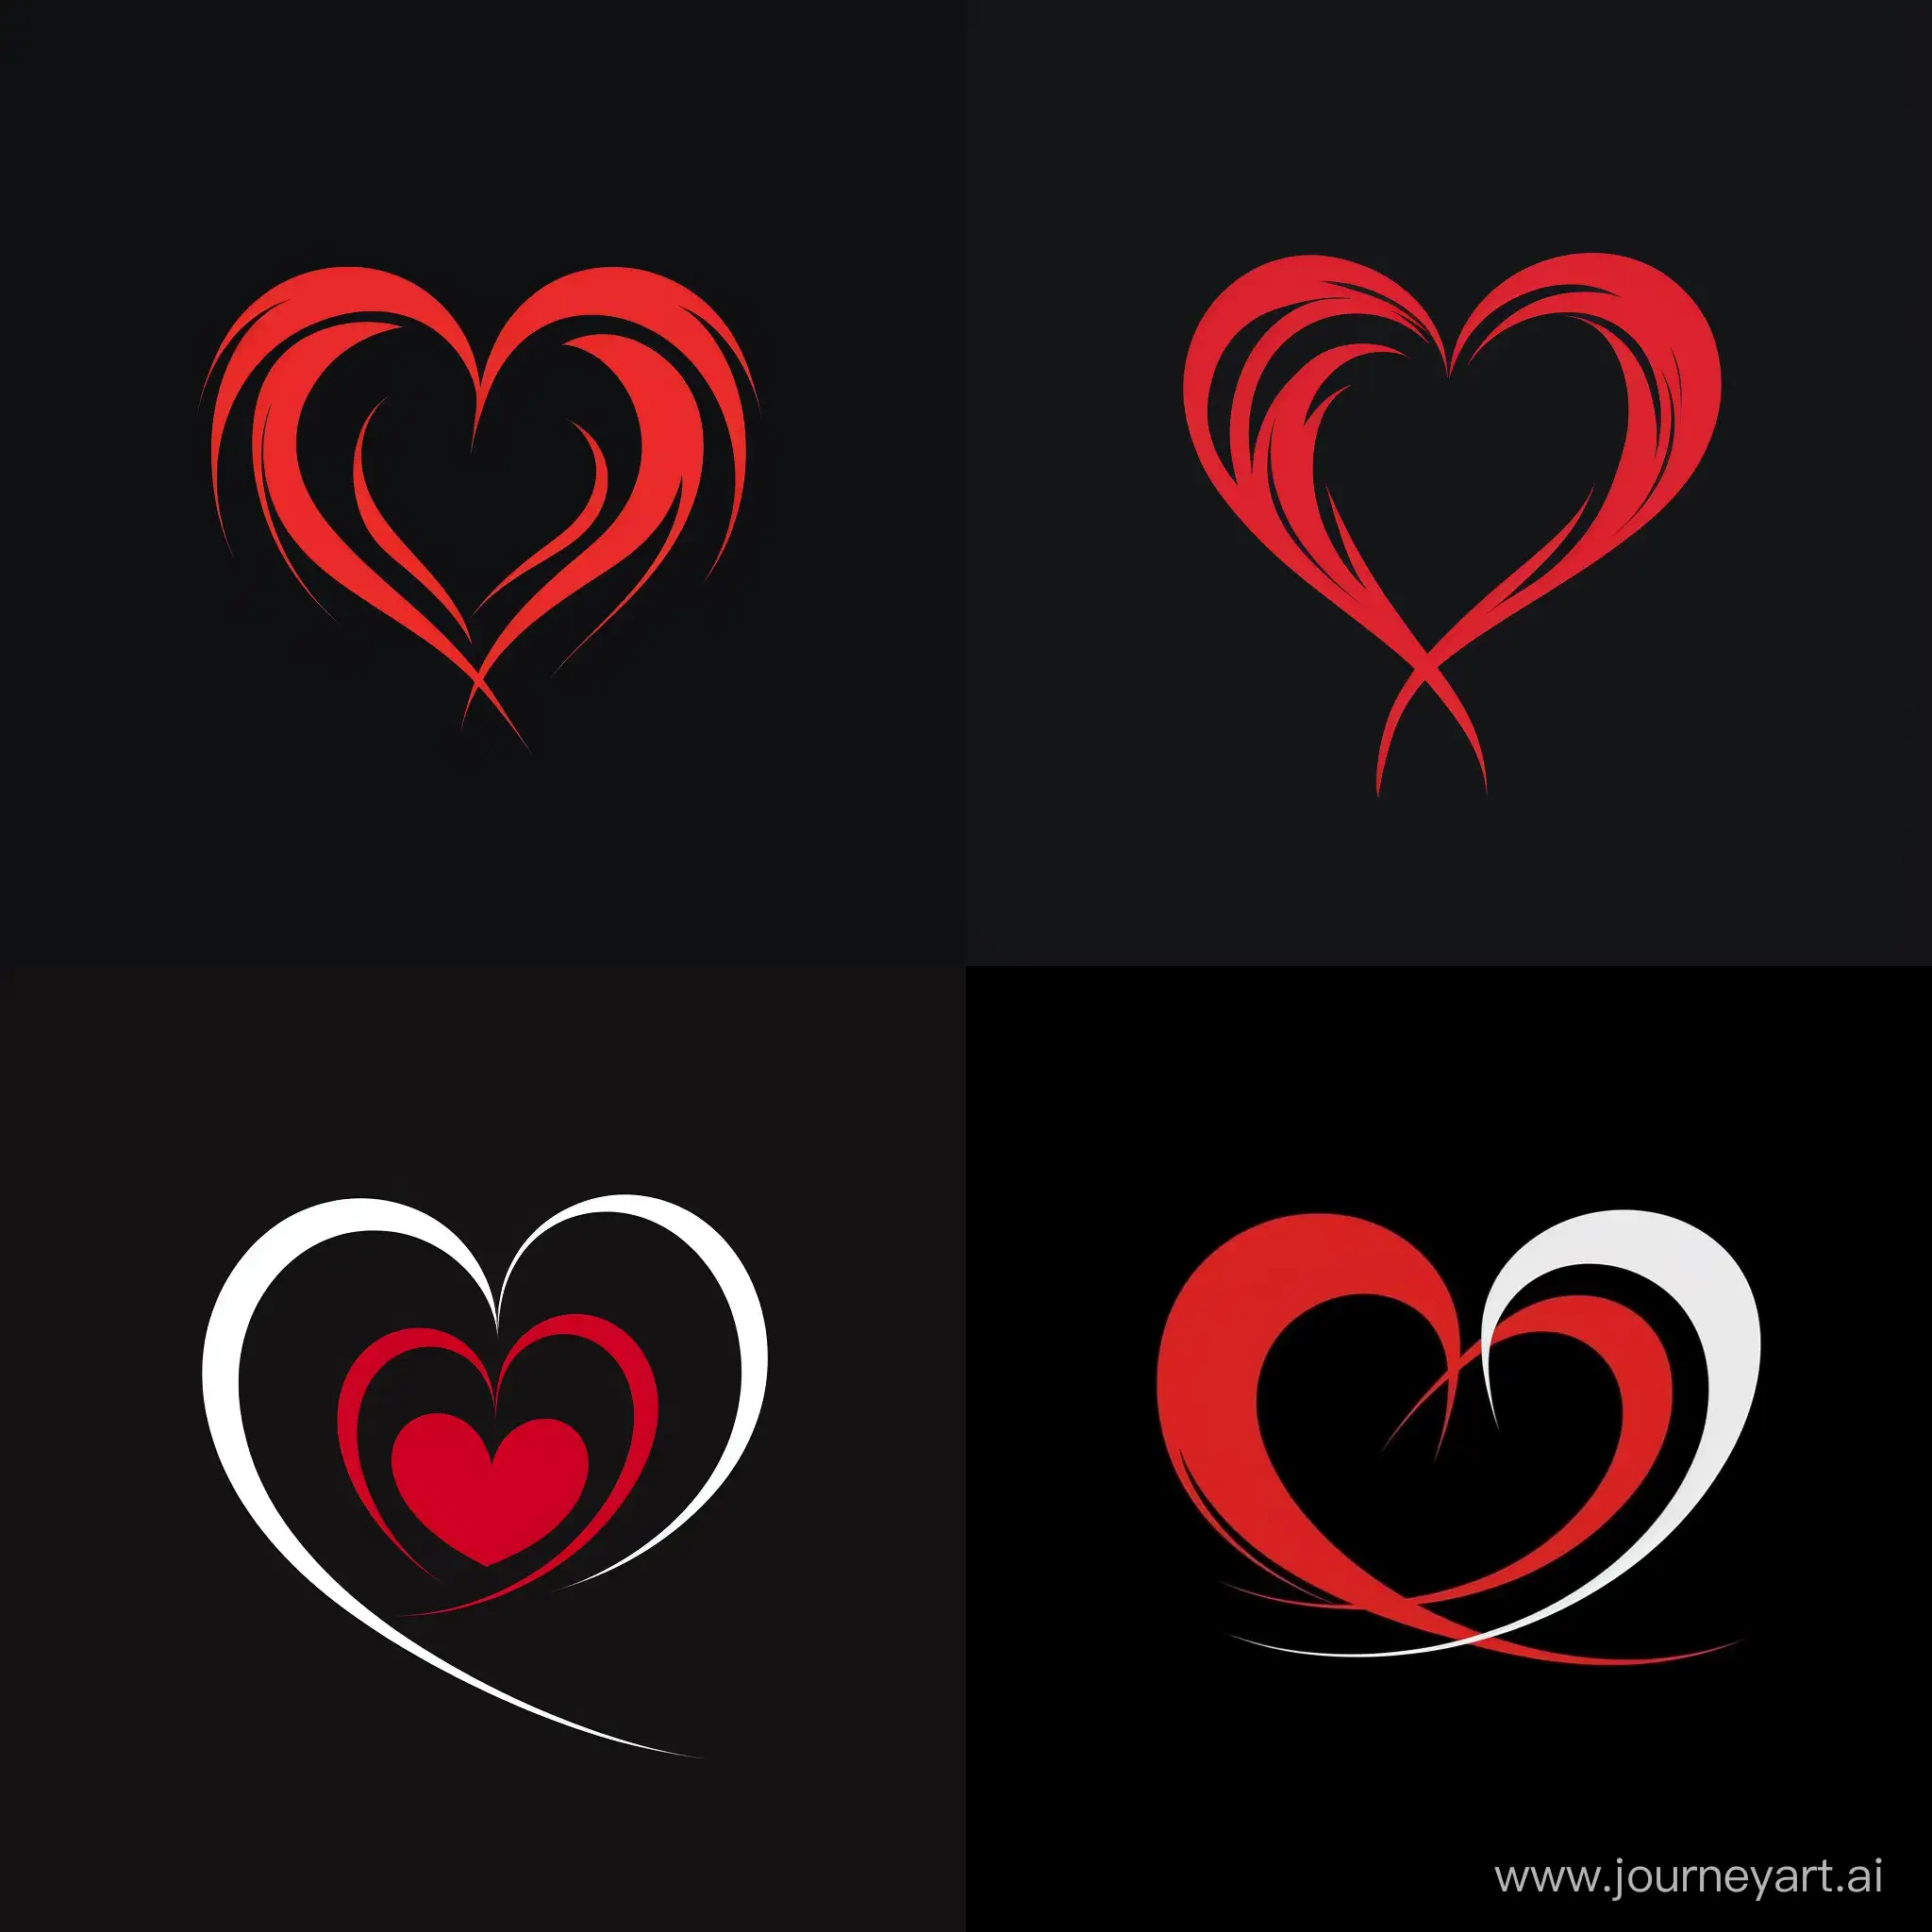 /imagine Theme: Brazilian Jiu-Jitsu Logo; Style:Minimalist; Elements: A red heart, A black belt tied around the heart